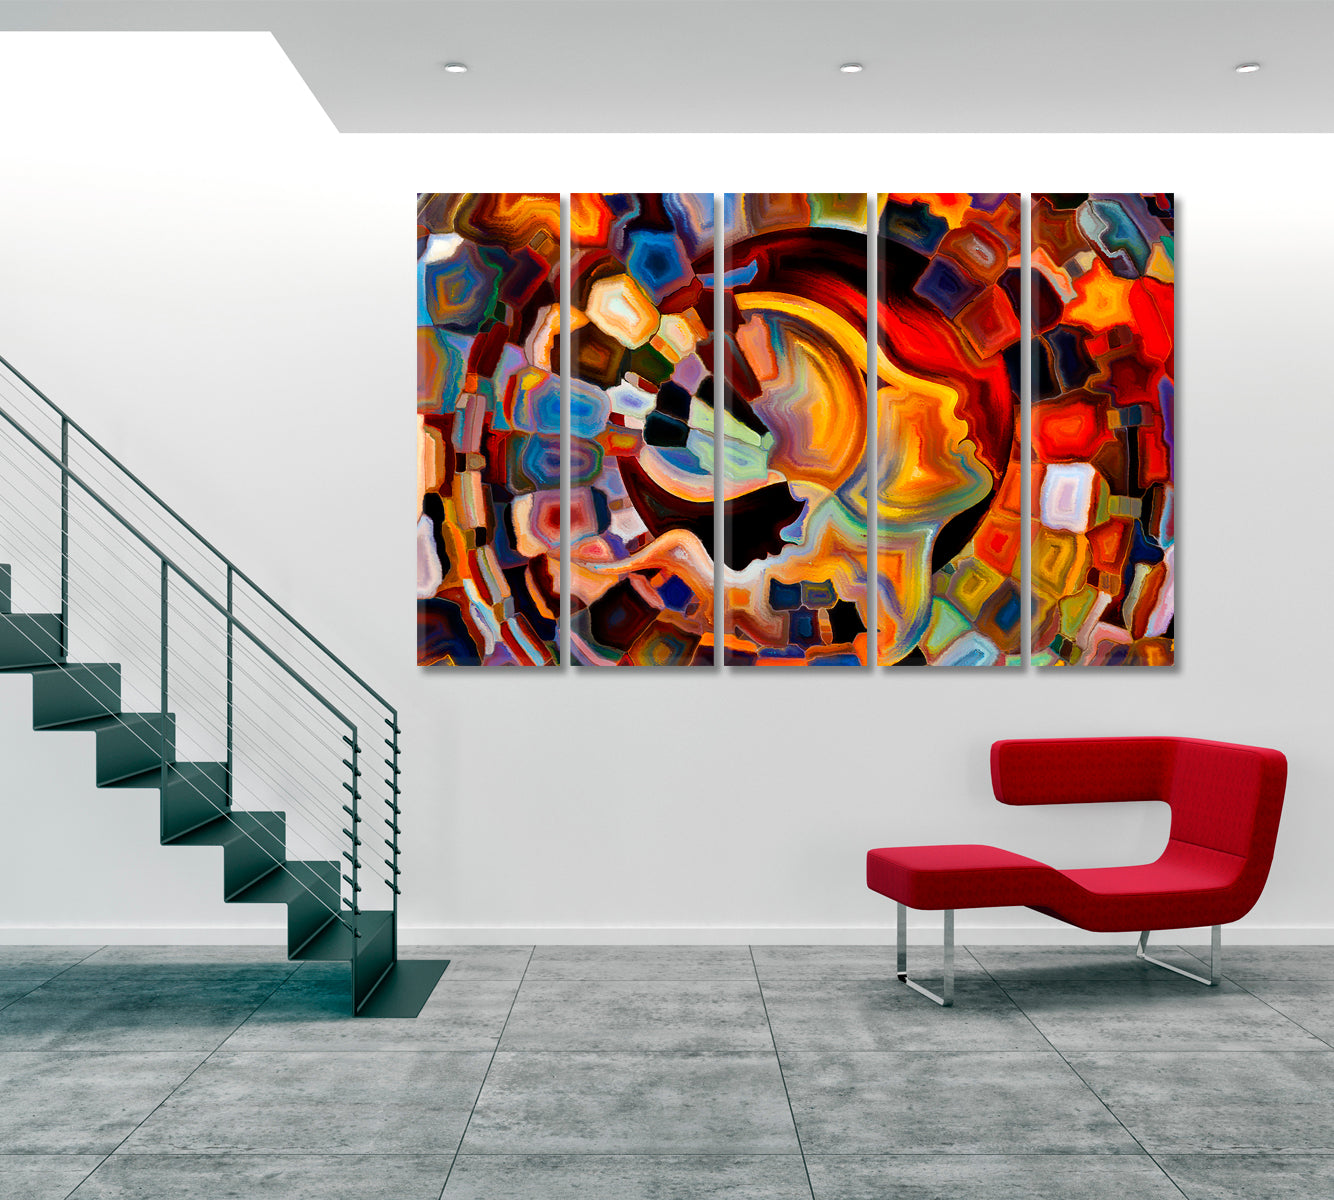 MOSAIC PATTERNS  Artistic Abstraction Human Mind Consciousness Art Artesty 5 panels 36" x 24" 